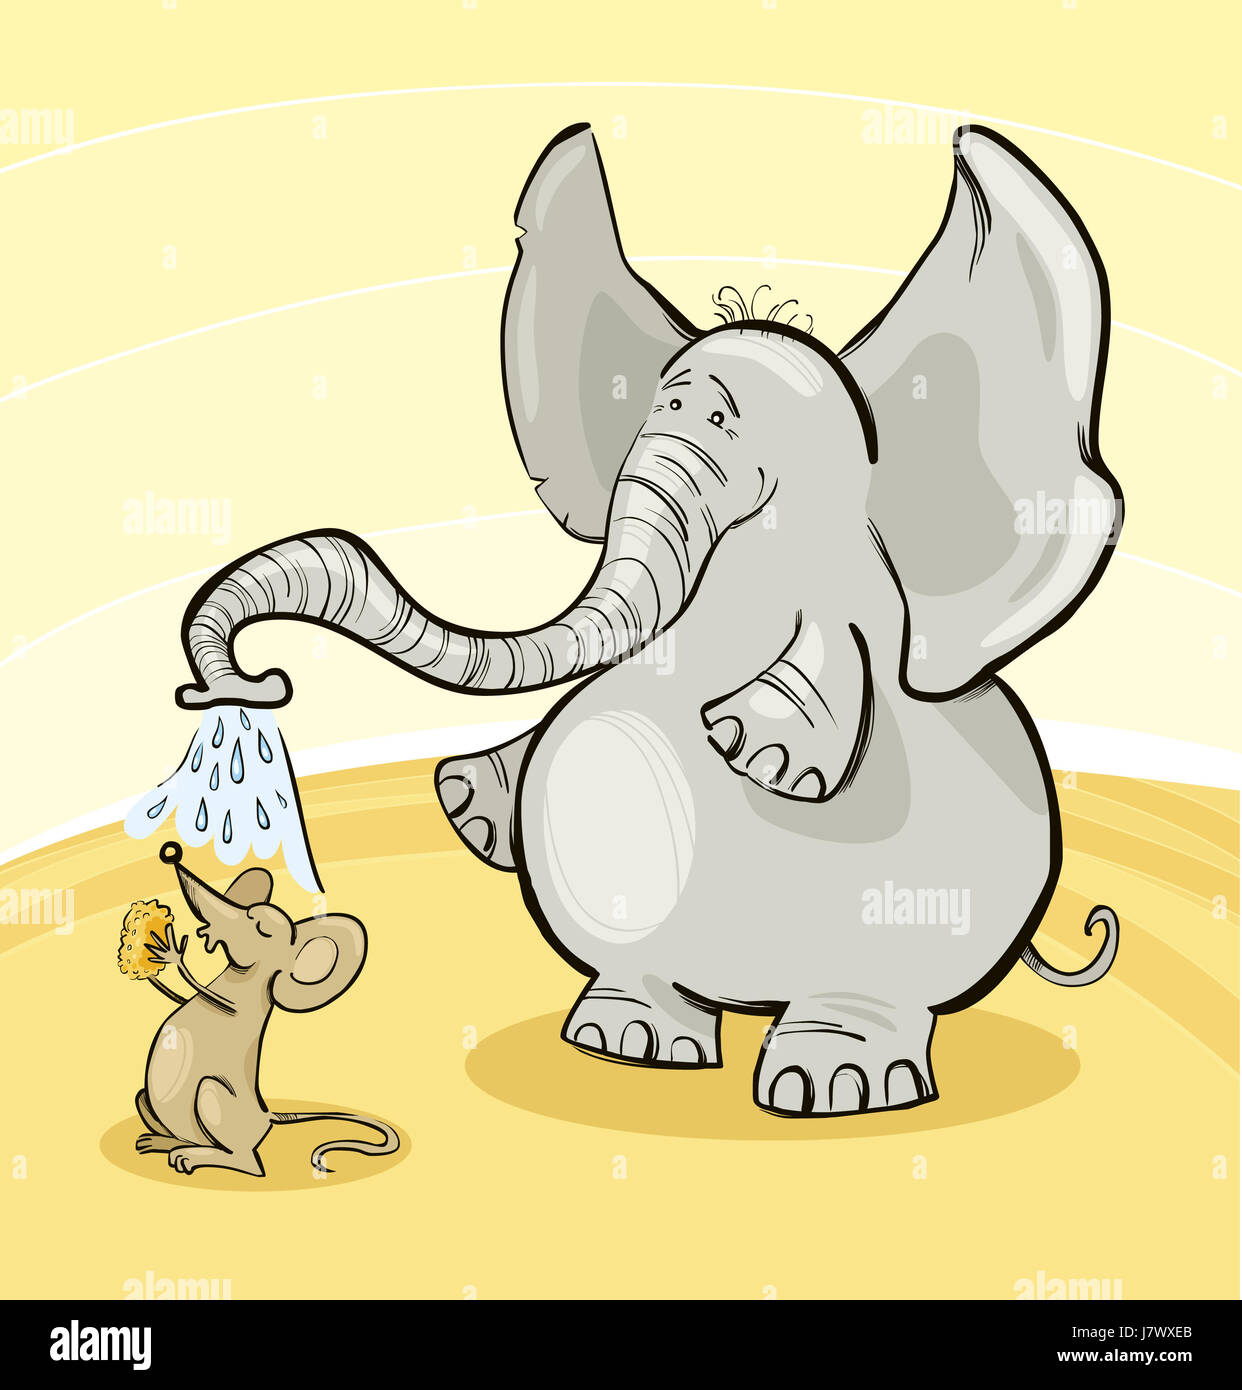 elephant illustration funny cartoon friend comics mouse friendship art  comic Stock Photo - Alamy